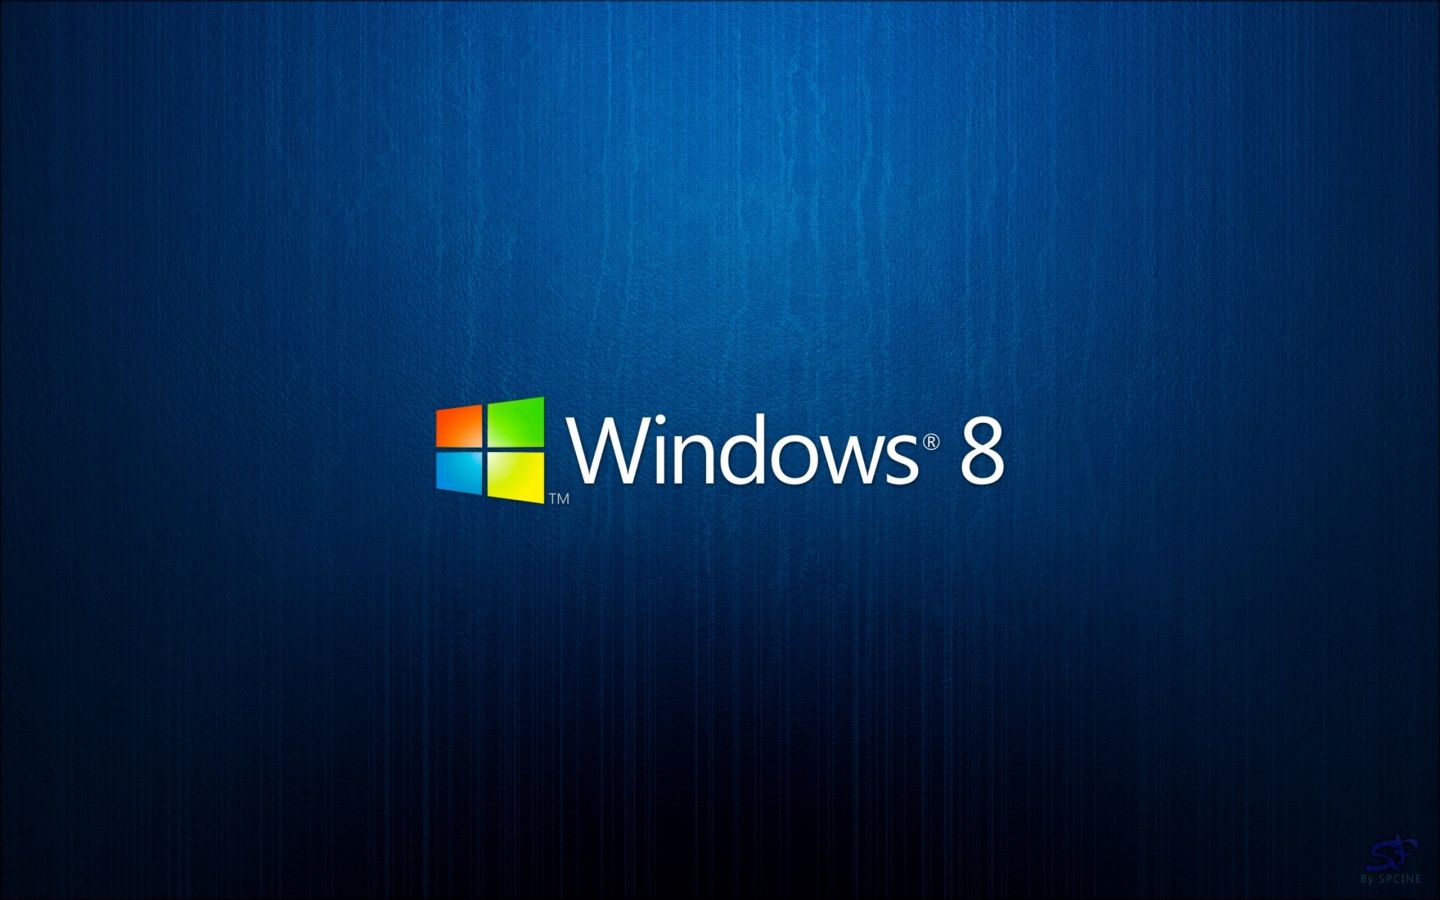 Windows 8 desktop PC and Mac wallpaper